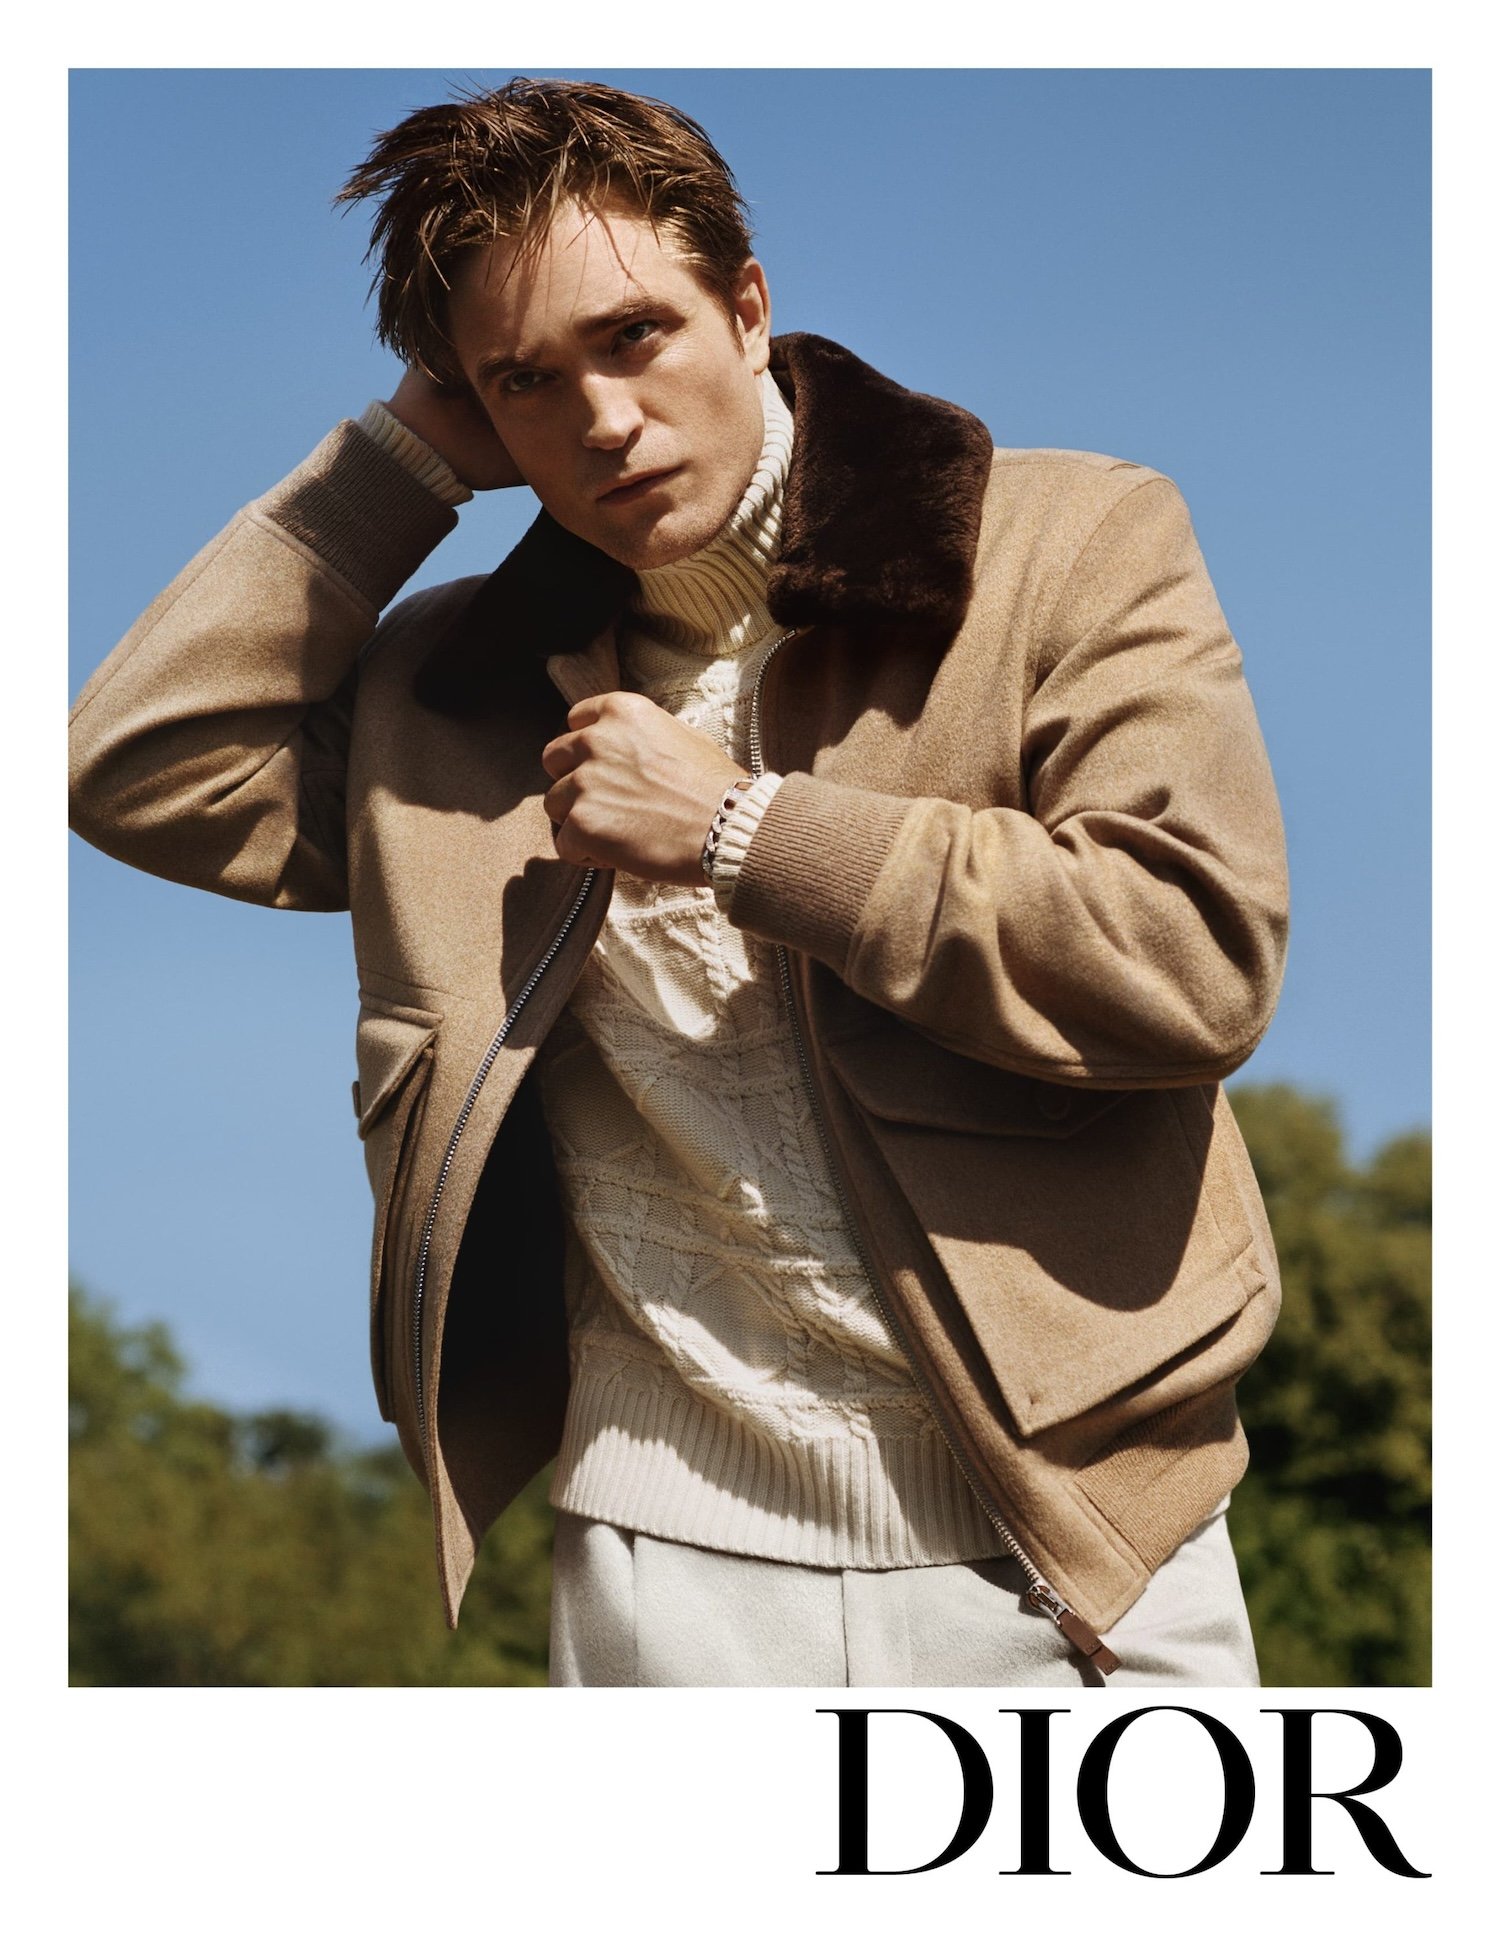 Dior-Men-Icons-Robert-Pattinson-by-Alasdair-McLellan-4.jpg